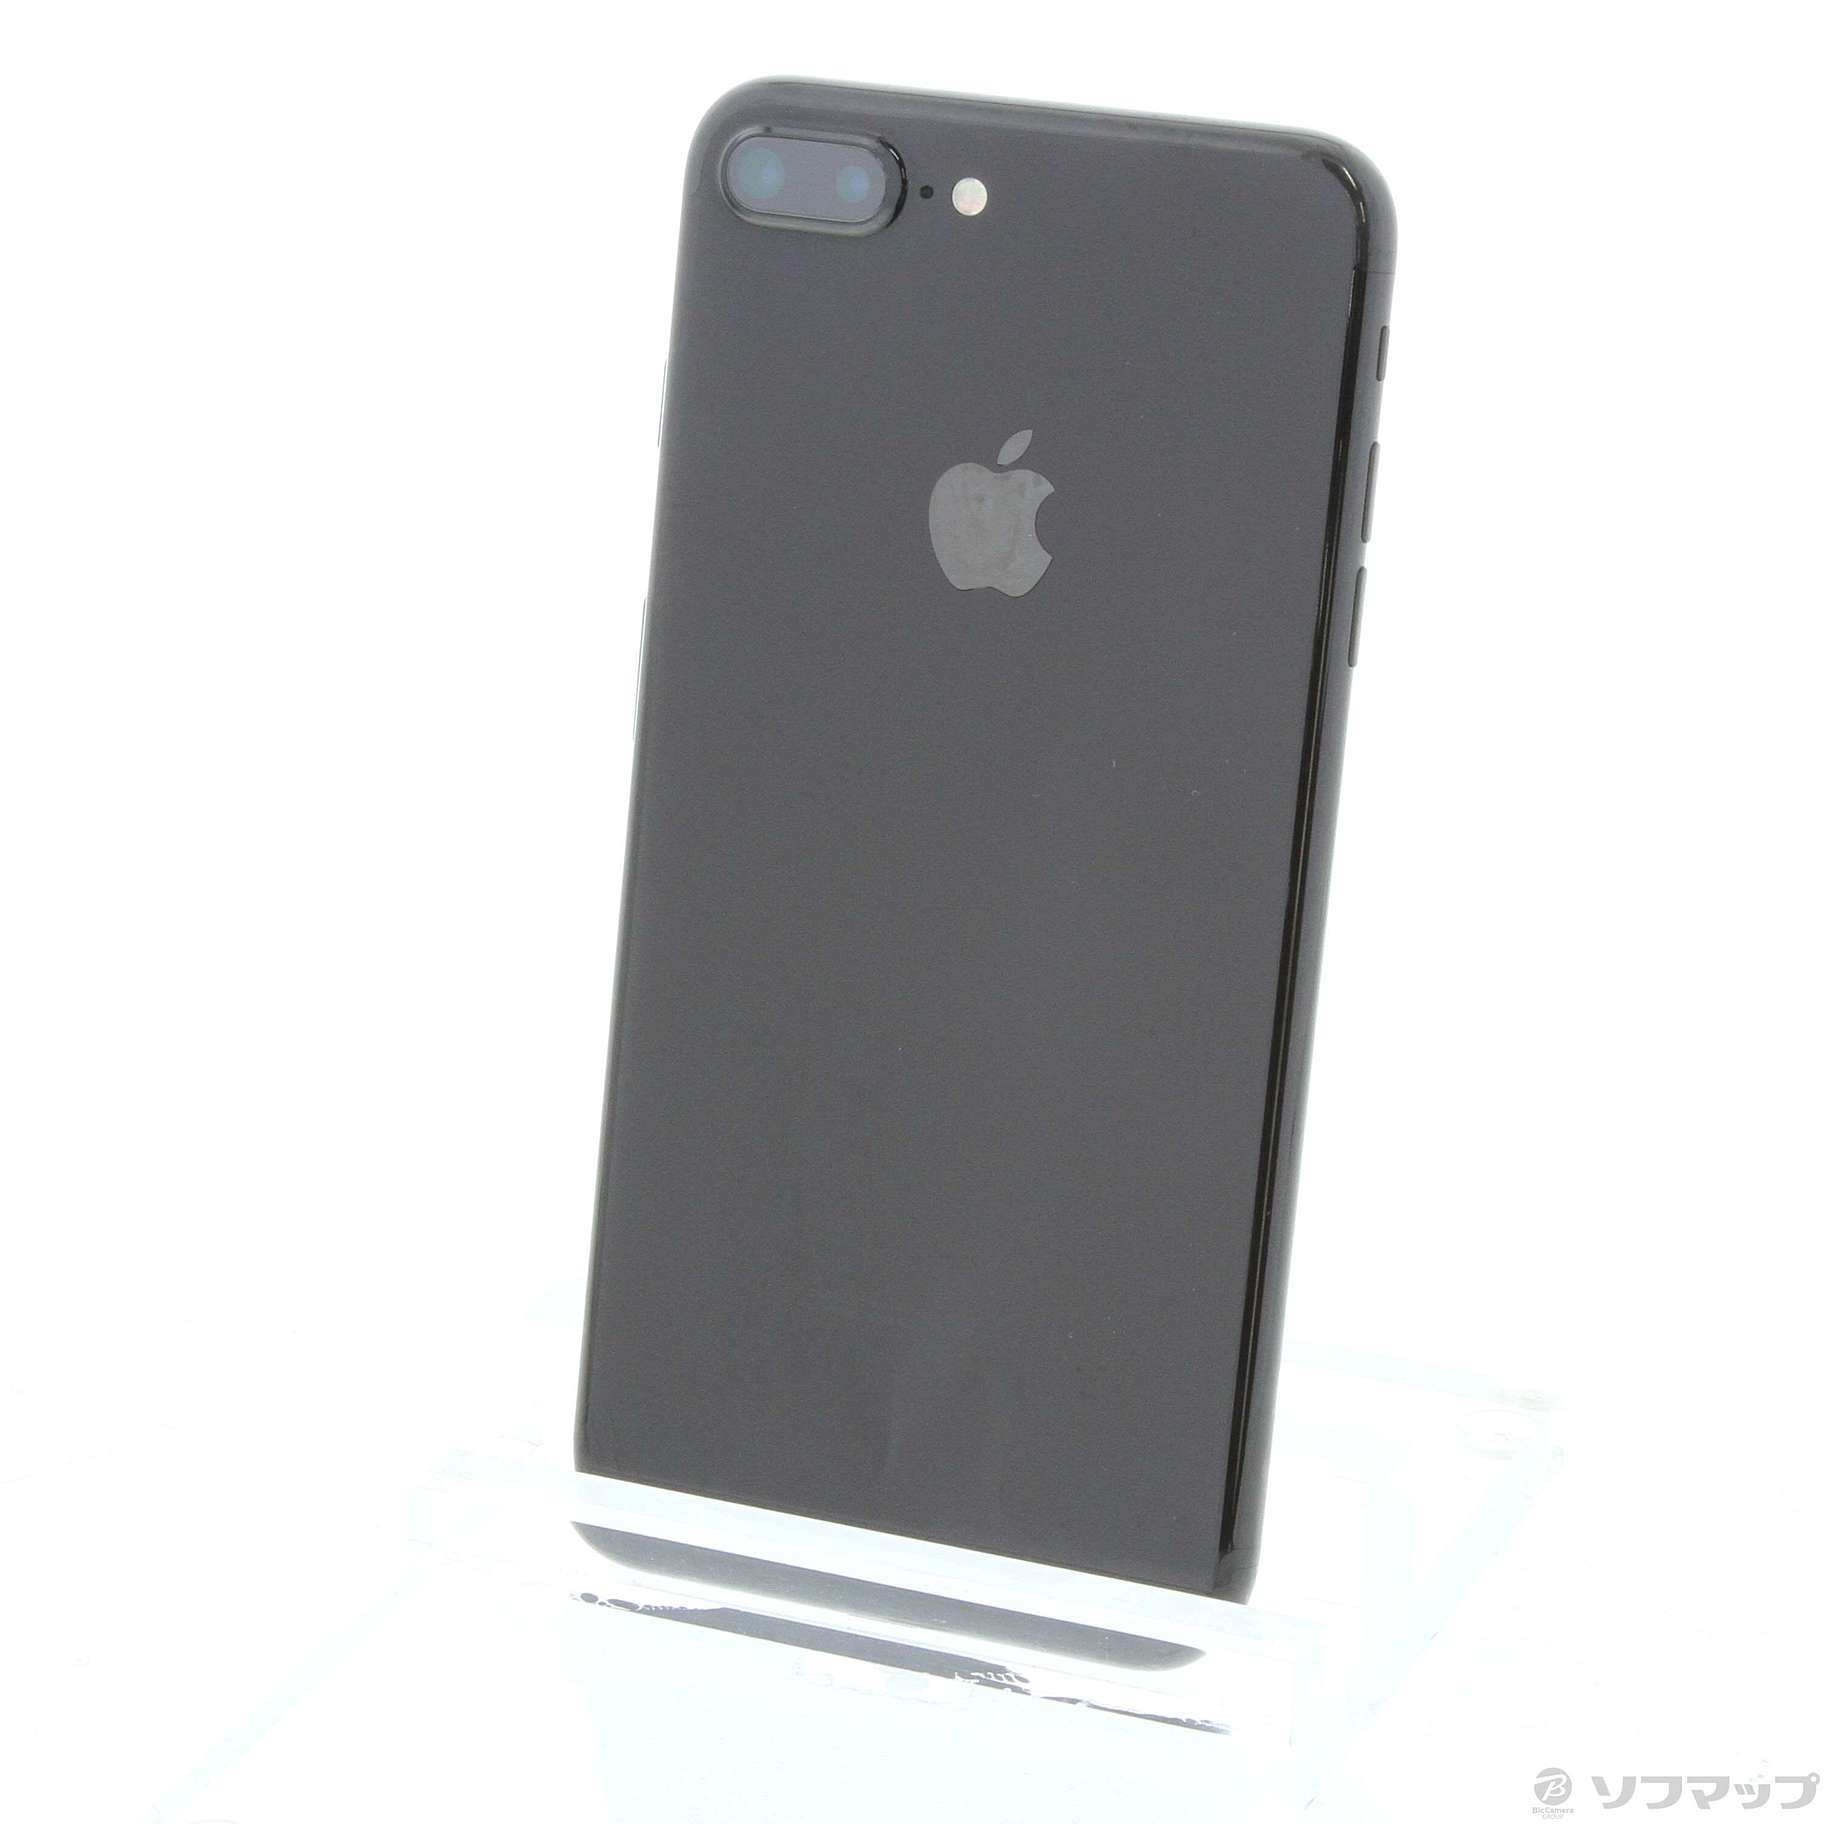 Apple iPhone 7 Plus 256GB ジェットブラック - www.sorbillomenu.com